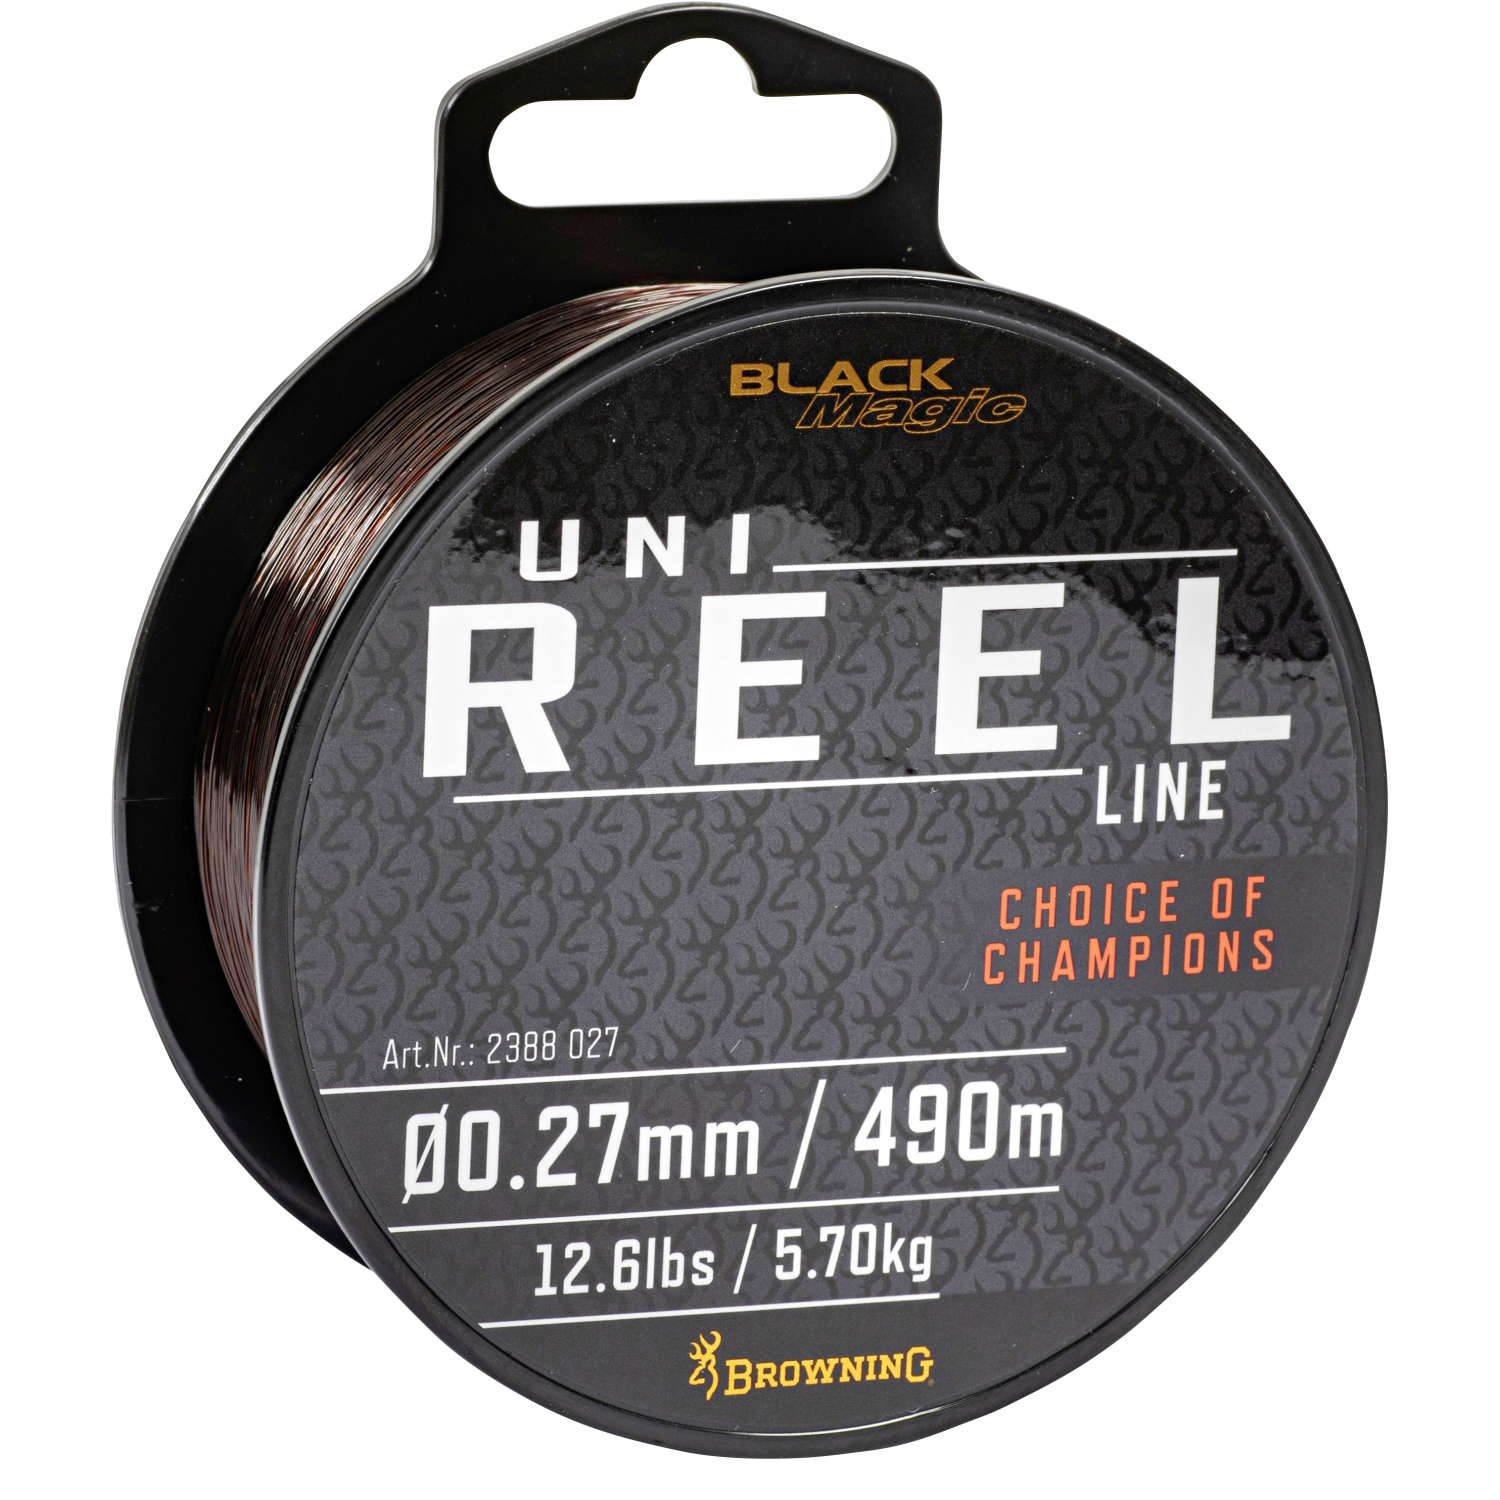 Browning Fishing Line Black Magic Uni Reel Line at low prices